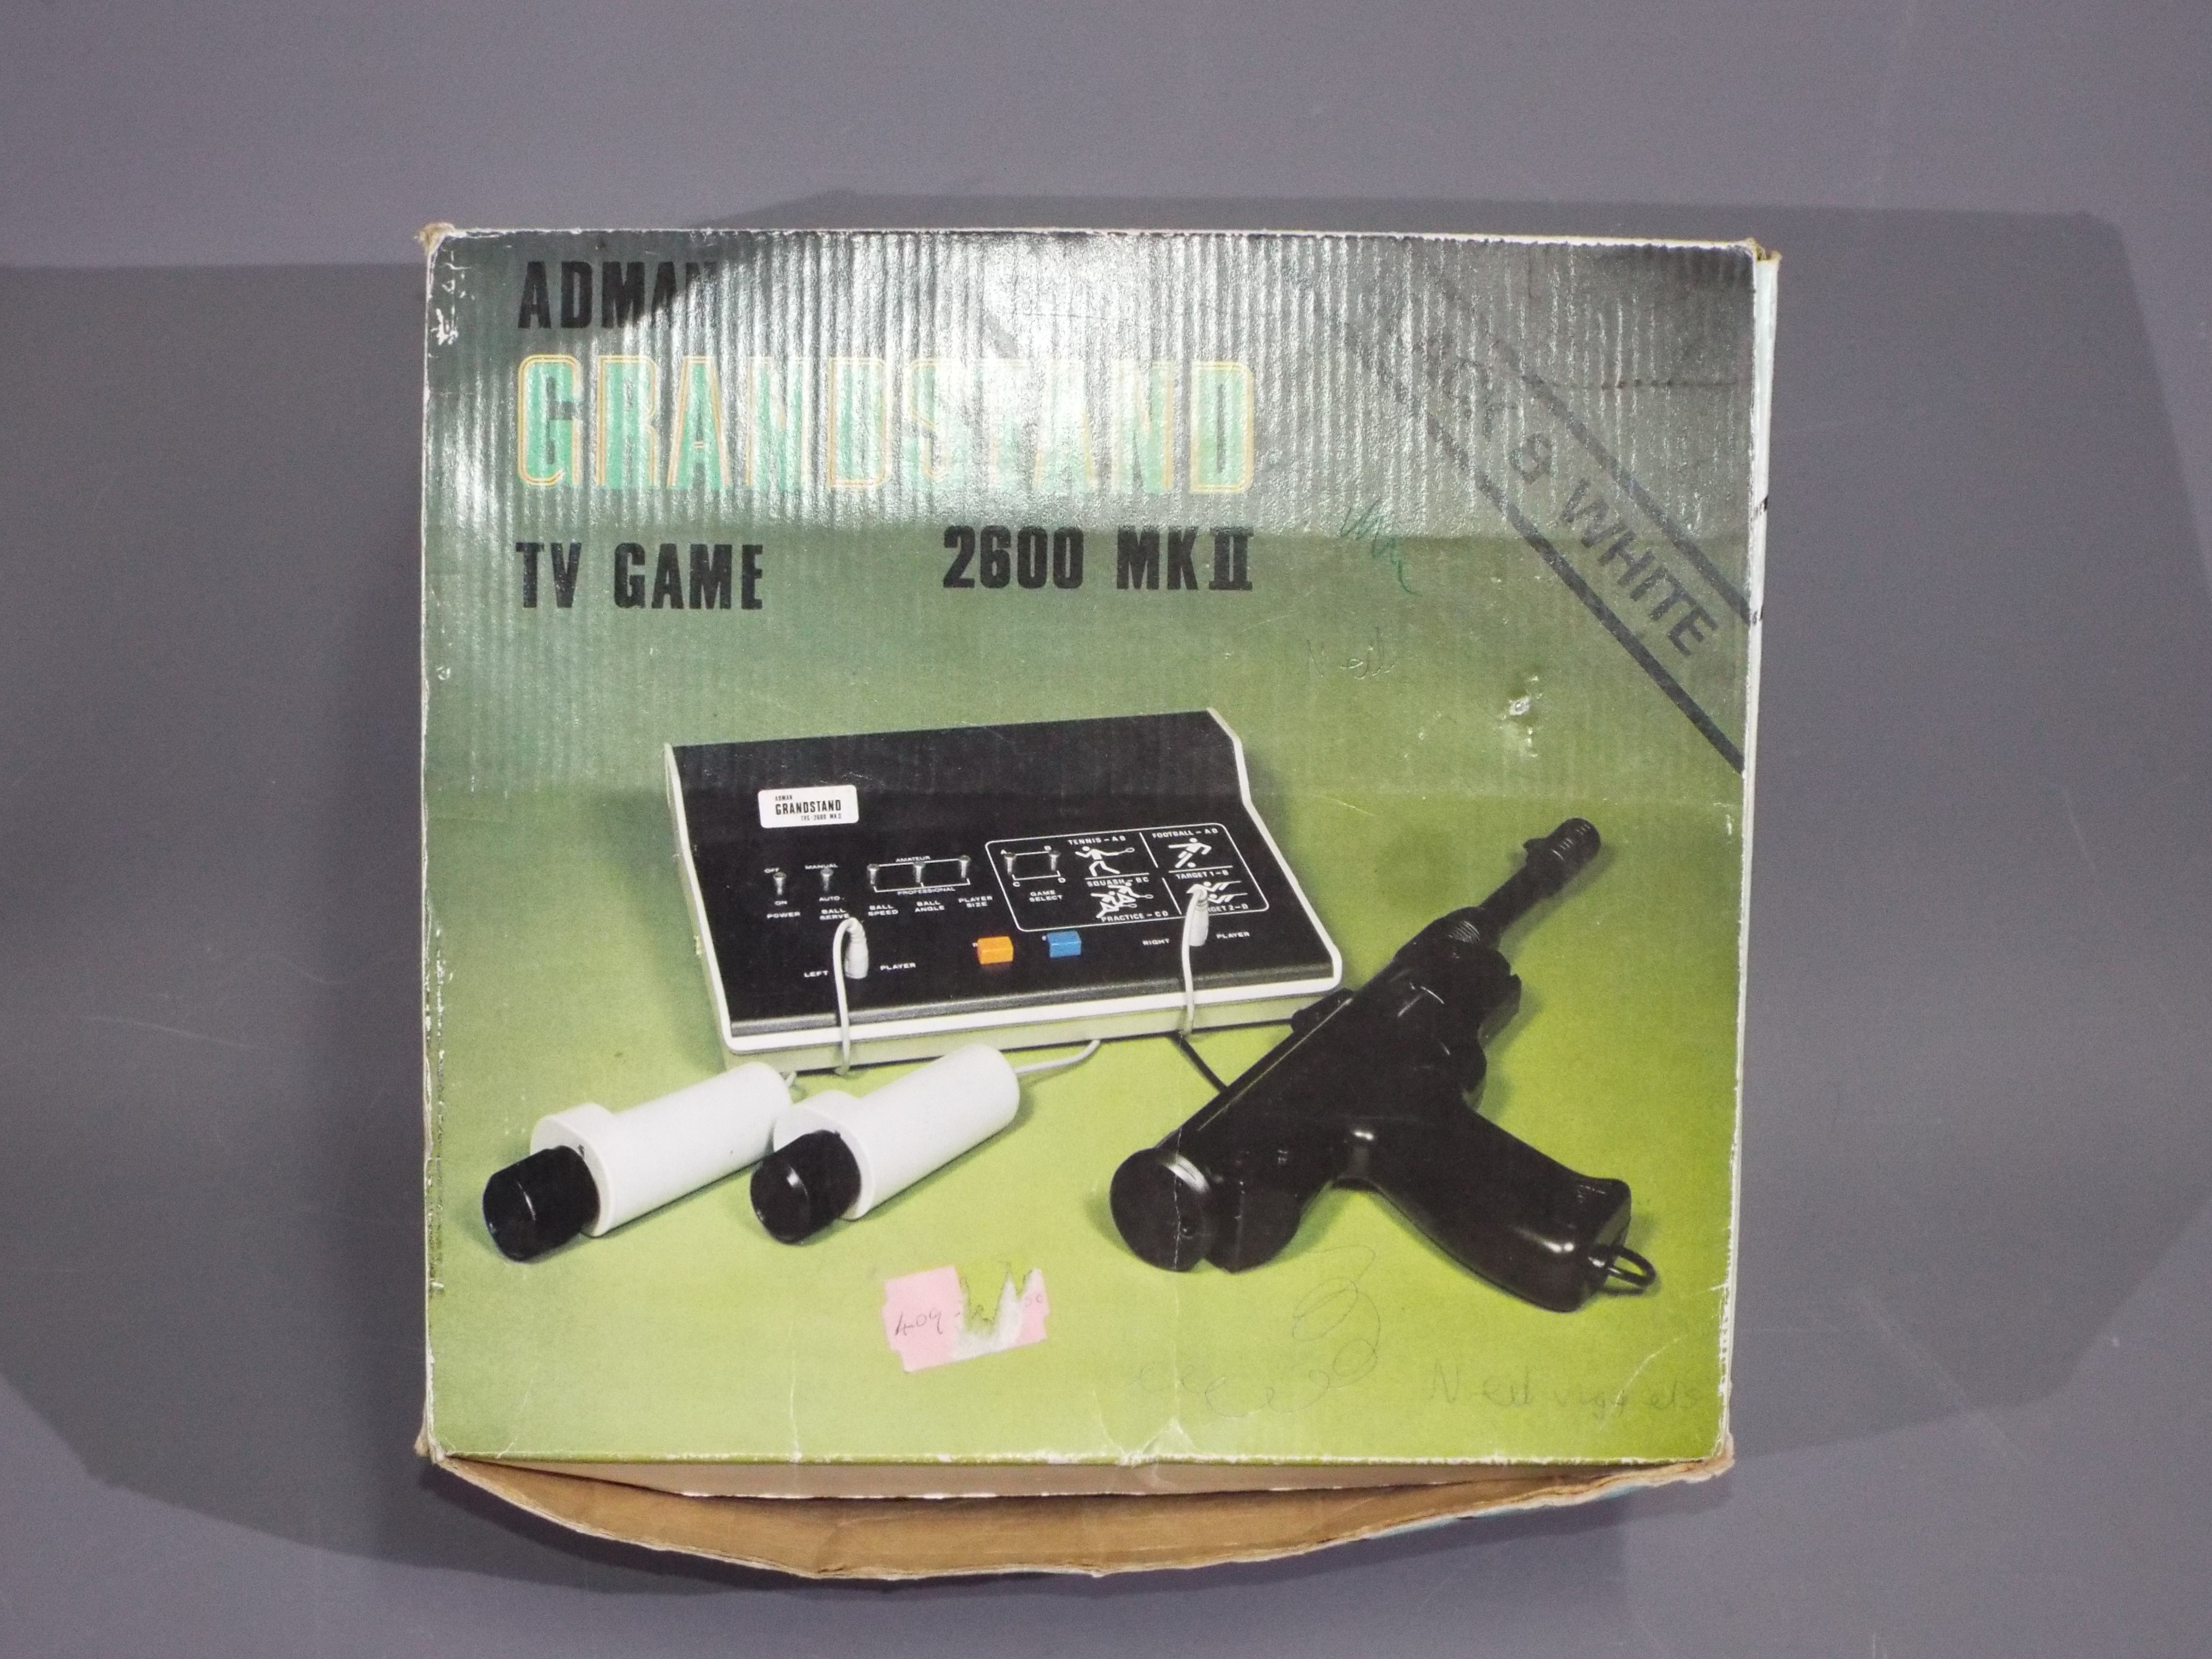 Adman - A boxed vintage Adman Grandstand 2600 MKII TV Game (Black & White).